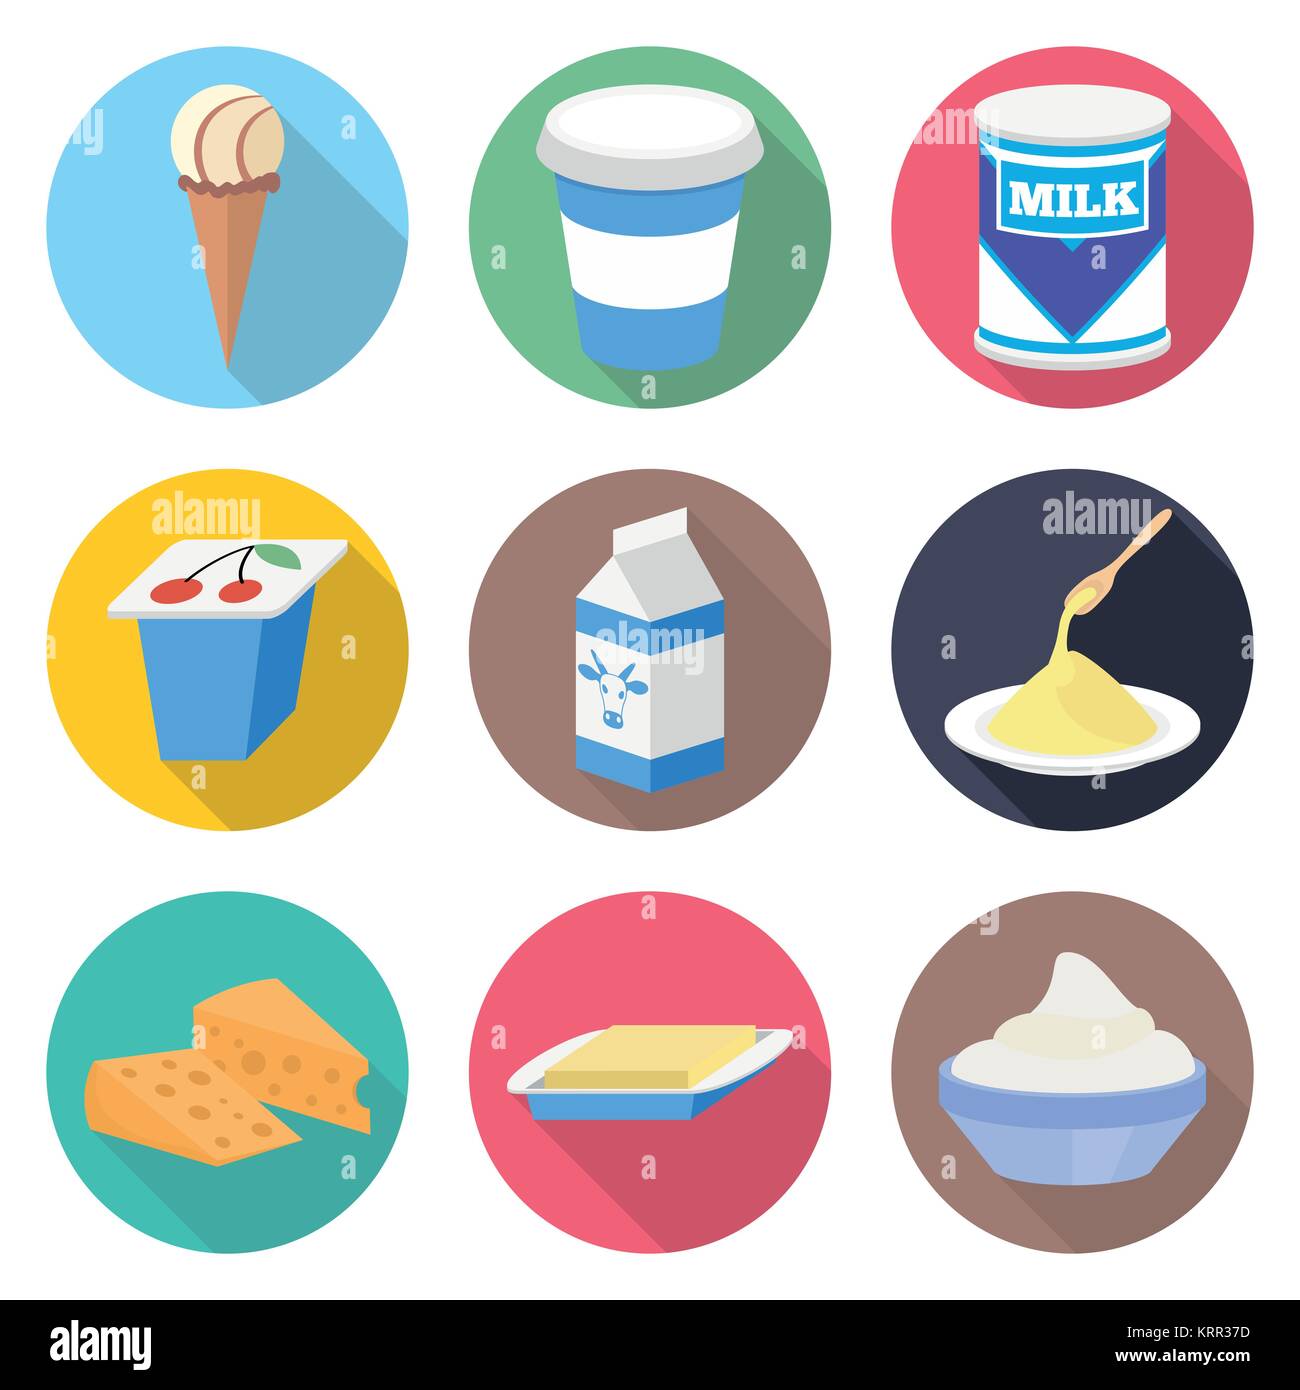 Milk products vector icon set - milk, yogurt, ice cream, cheese and ...